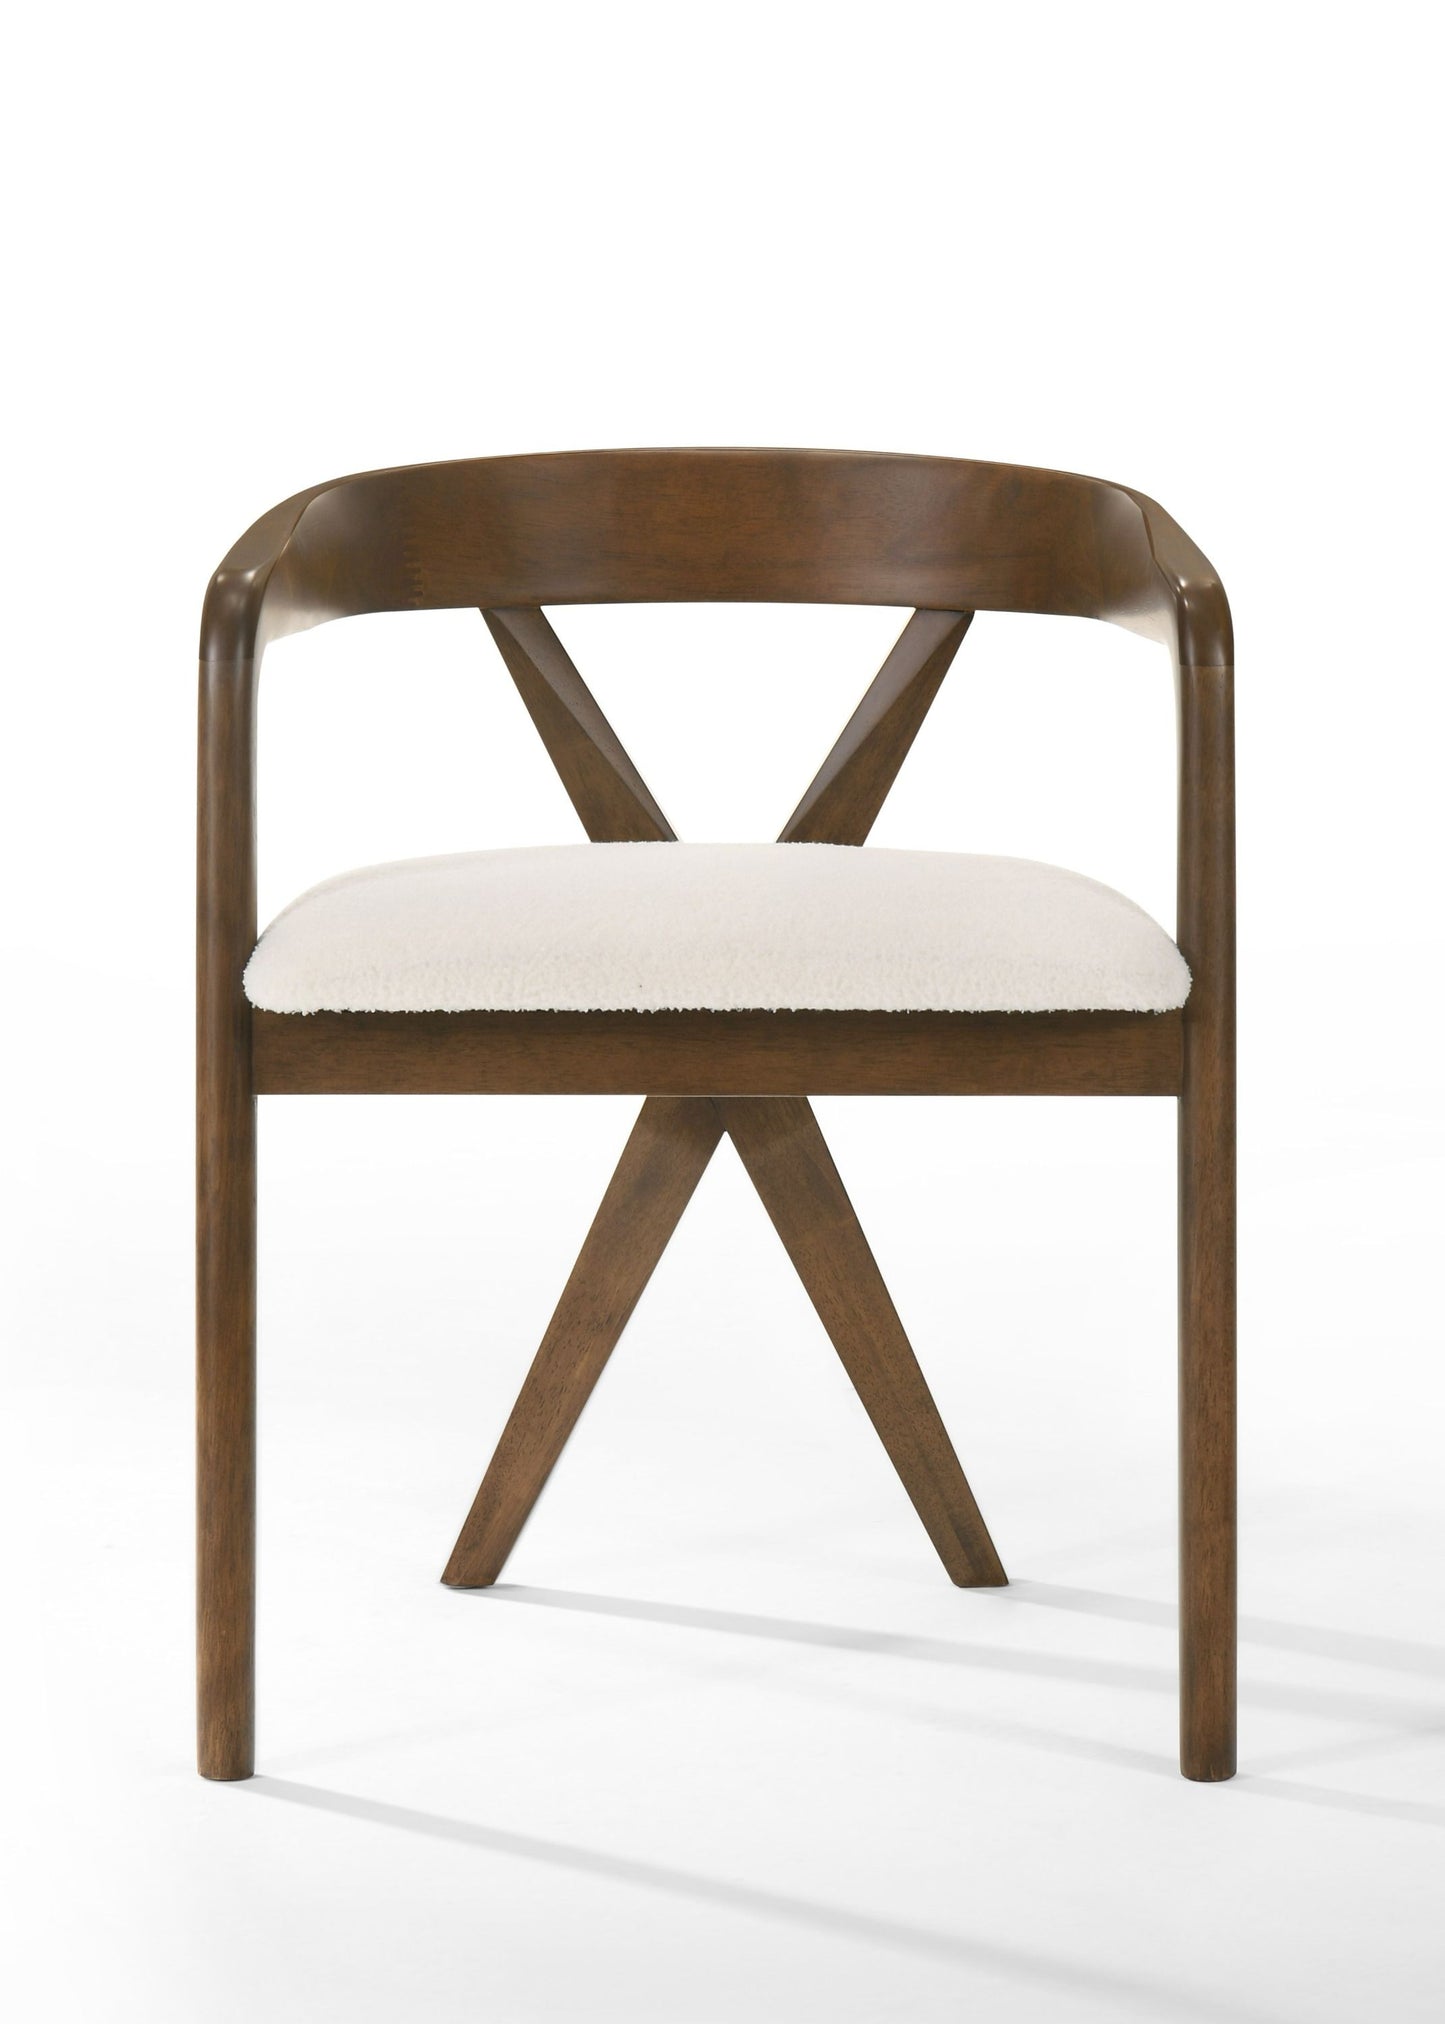 Modrest Weiss - Mid-Century Modern Walnut Round Dining Table + 6 Chair Set